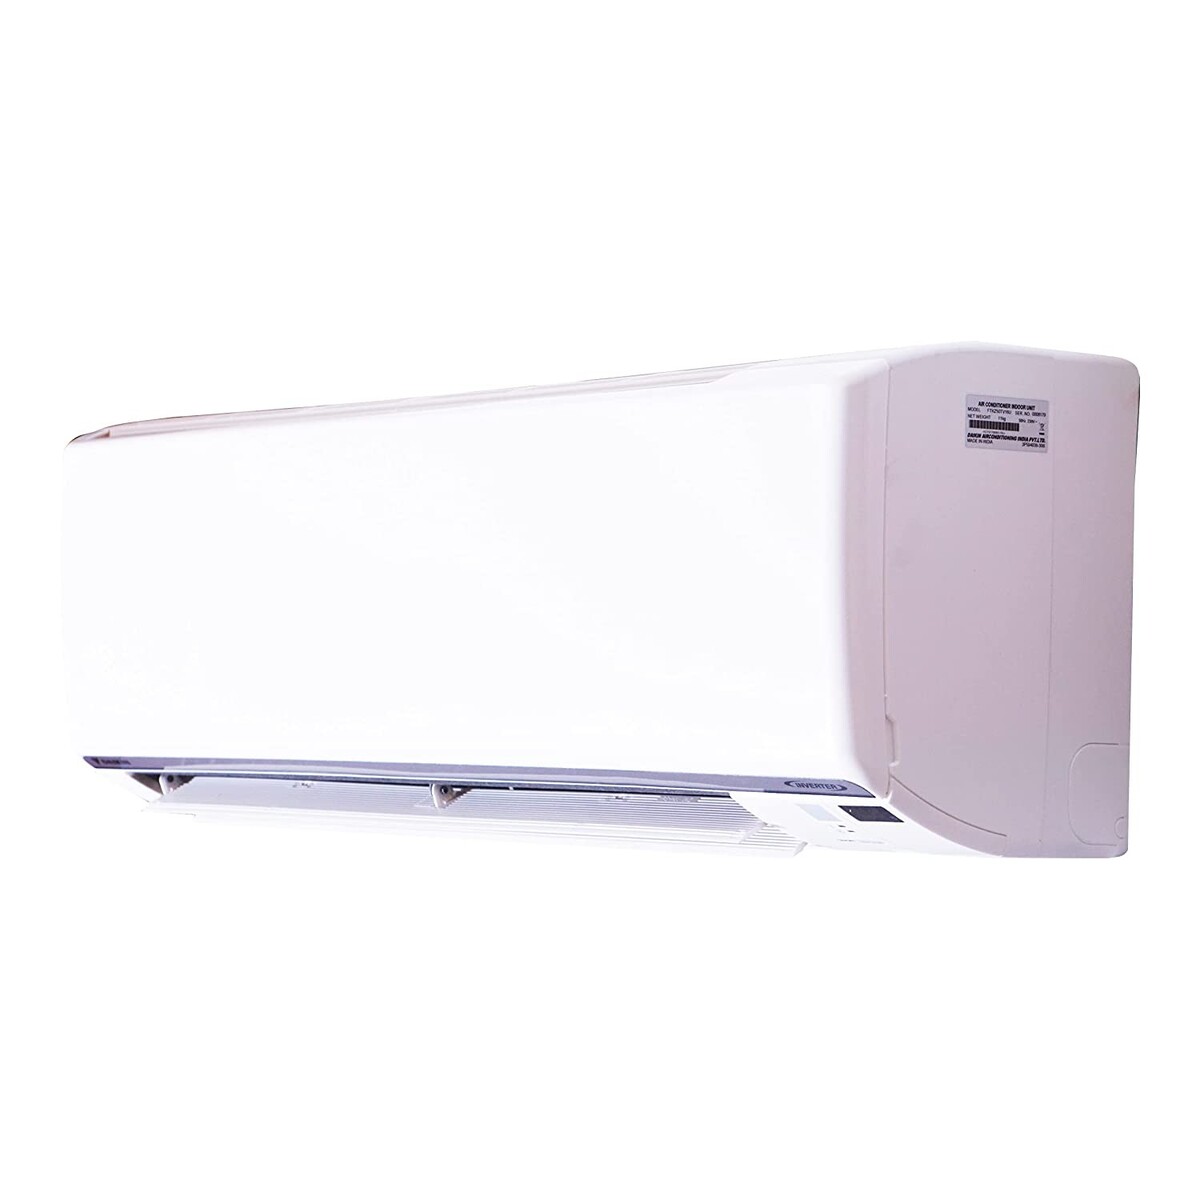 Daikin Inverter Split Air Conditioner FTKZ50TV16U 1.5 Ton 5 Star